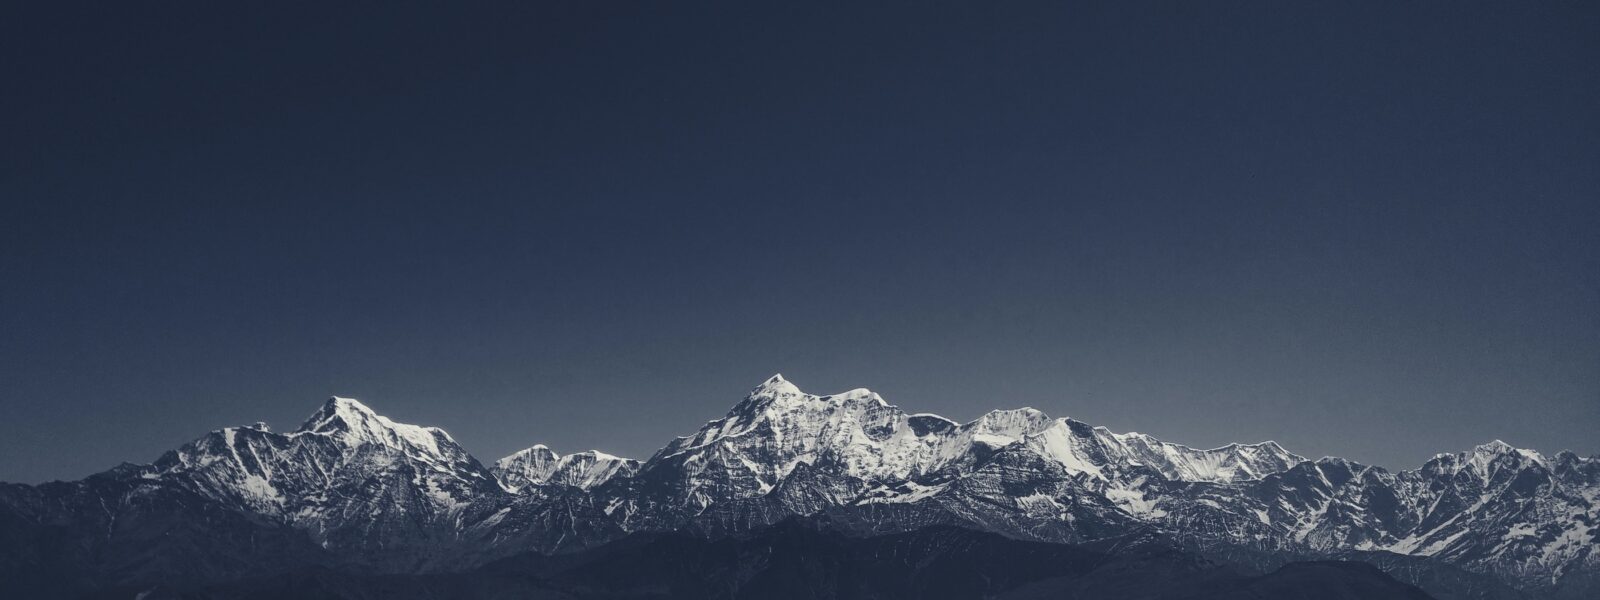 Himalayan Range at night